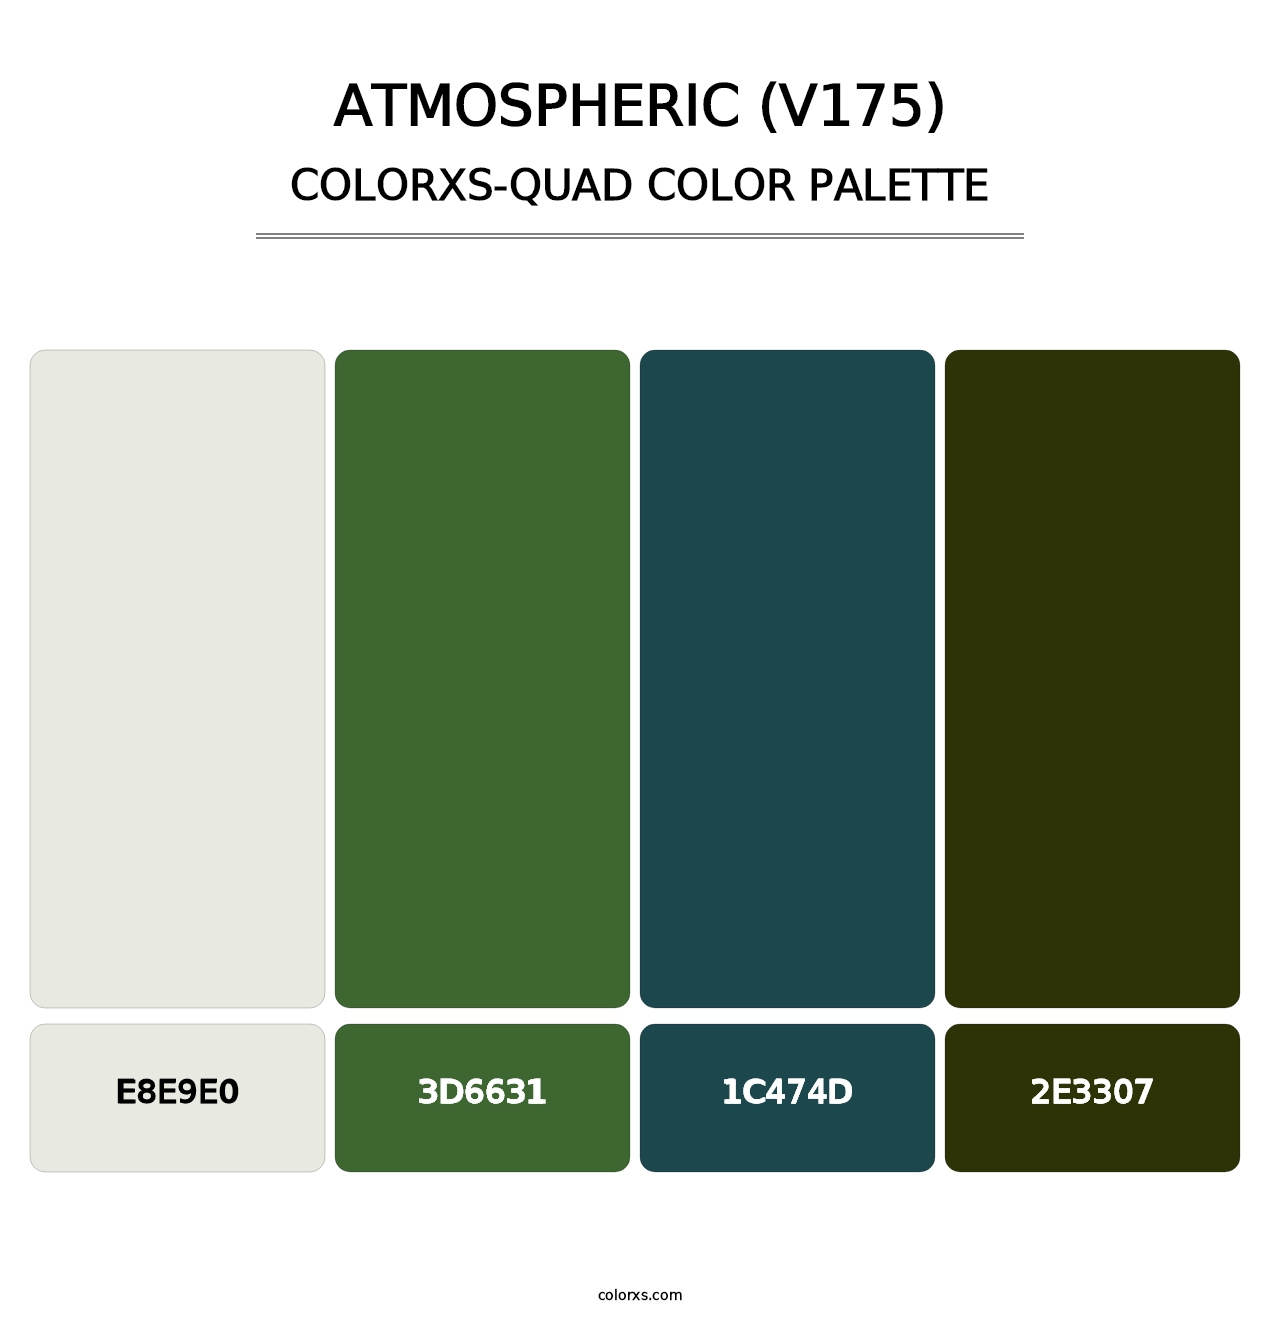 Atmospheric (V175) - Colorxs Quad Palette